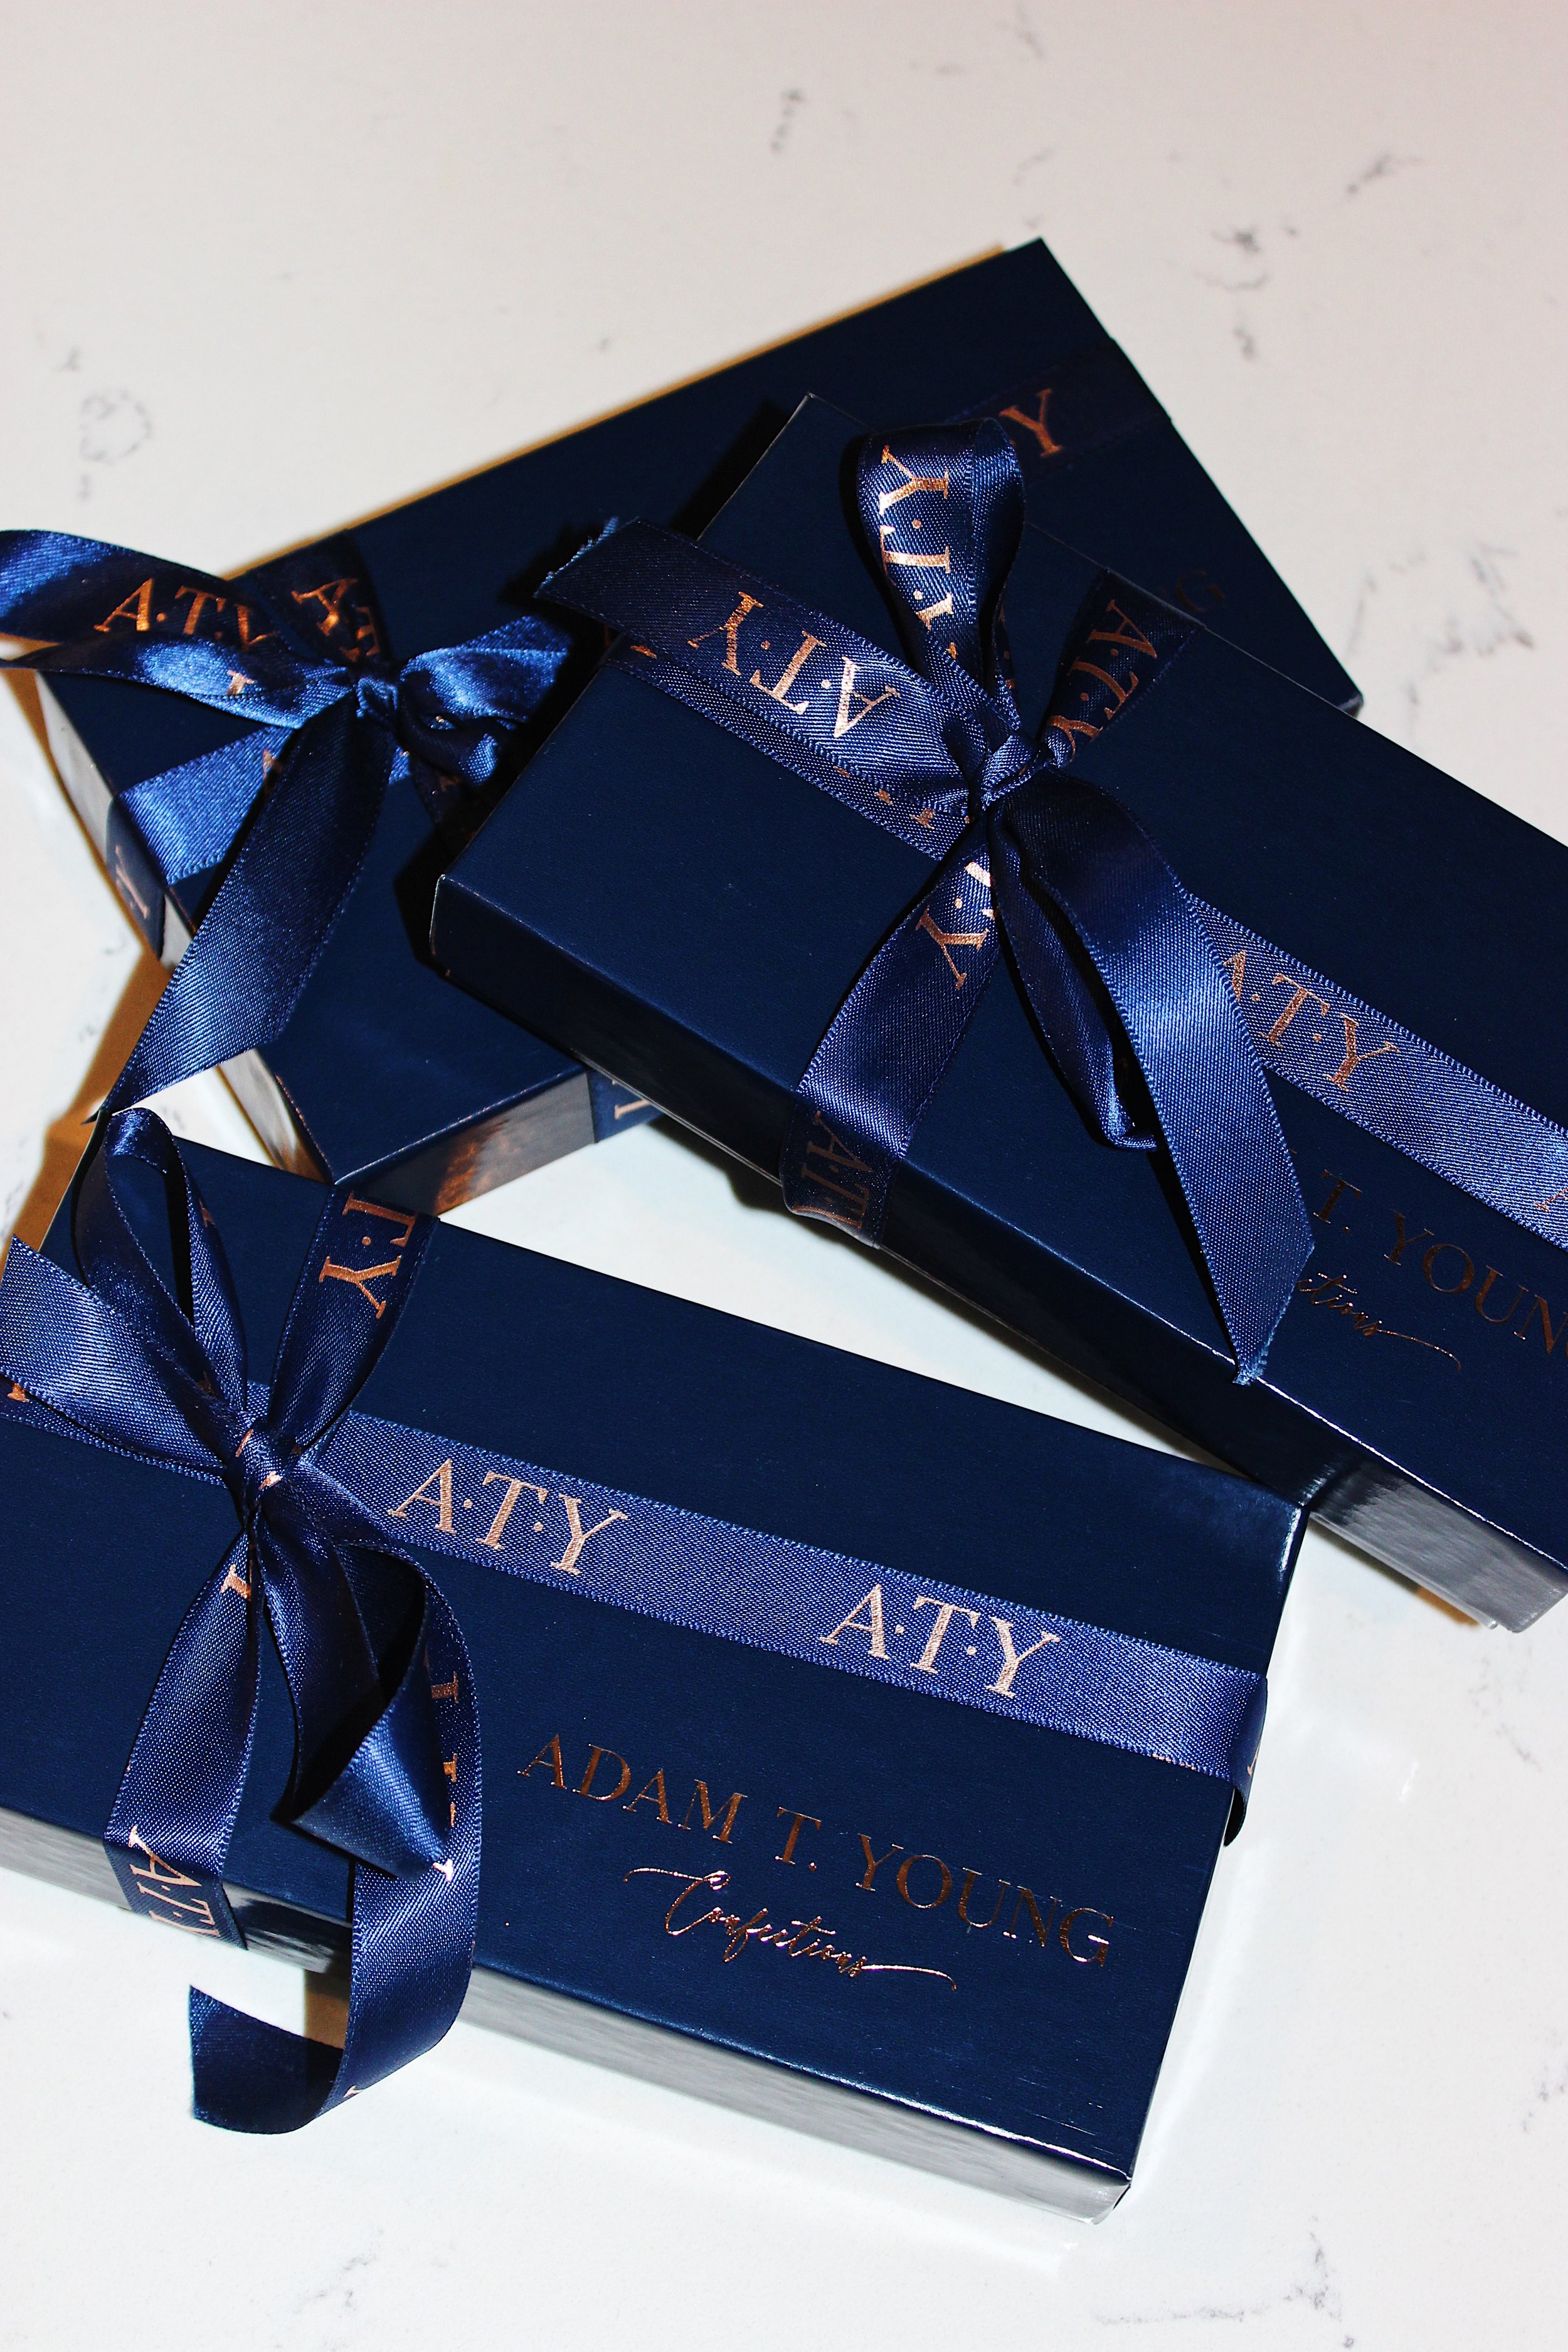 A.T.Y Confections